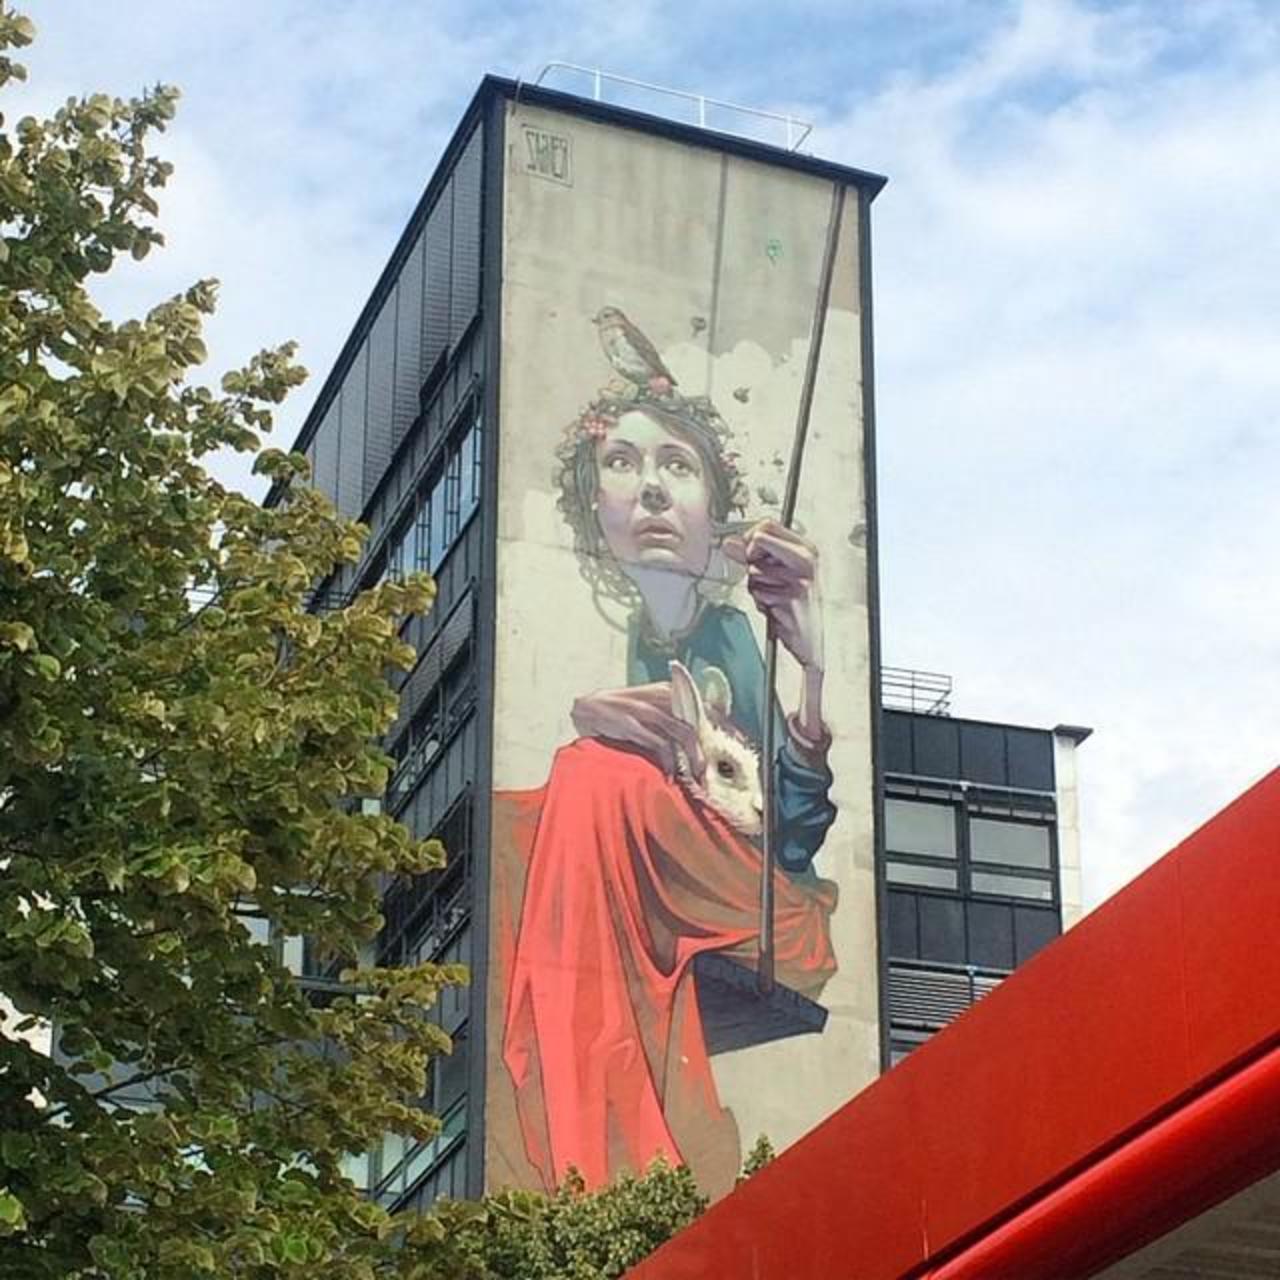 #balançoire by @sainer_etam #sainer #streetart #graffiti #mural #streetartparis #parisstreetart #paris13 by benapix http://t.co/LrGxT8pTKL